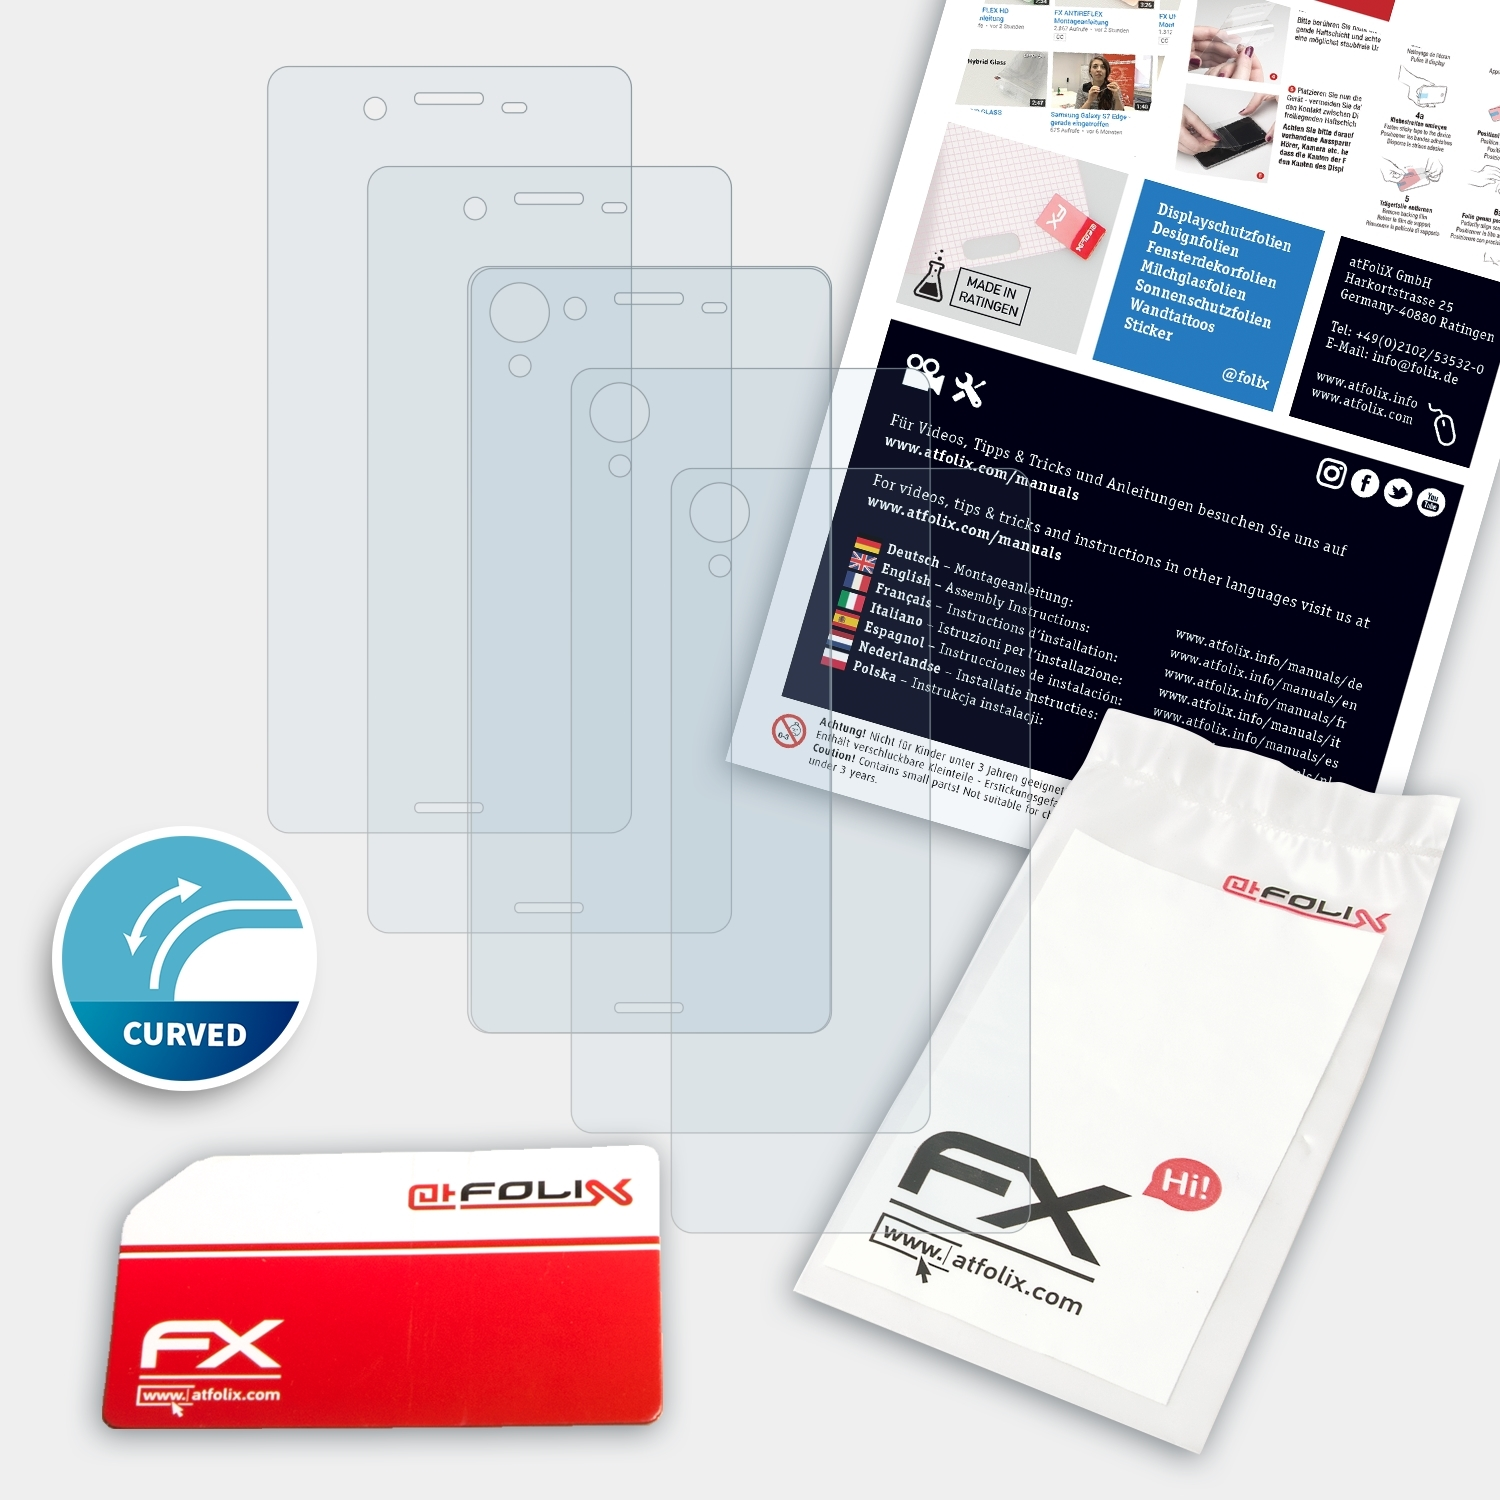 ATFOLIX FX-ActiFleX 3x X) Sony Displayschutz(für Xperia